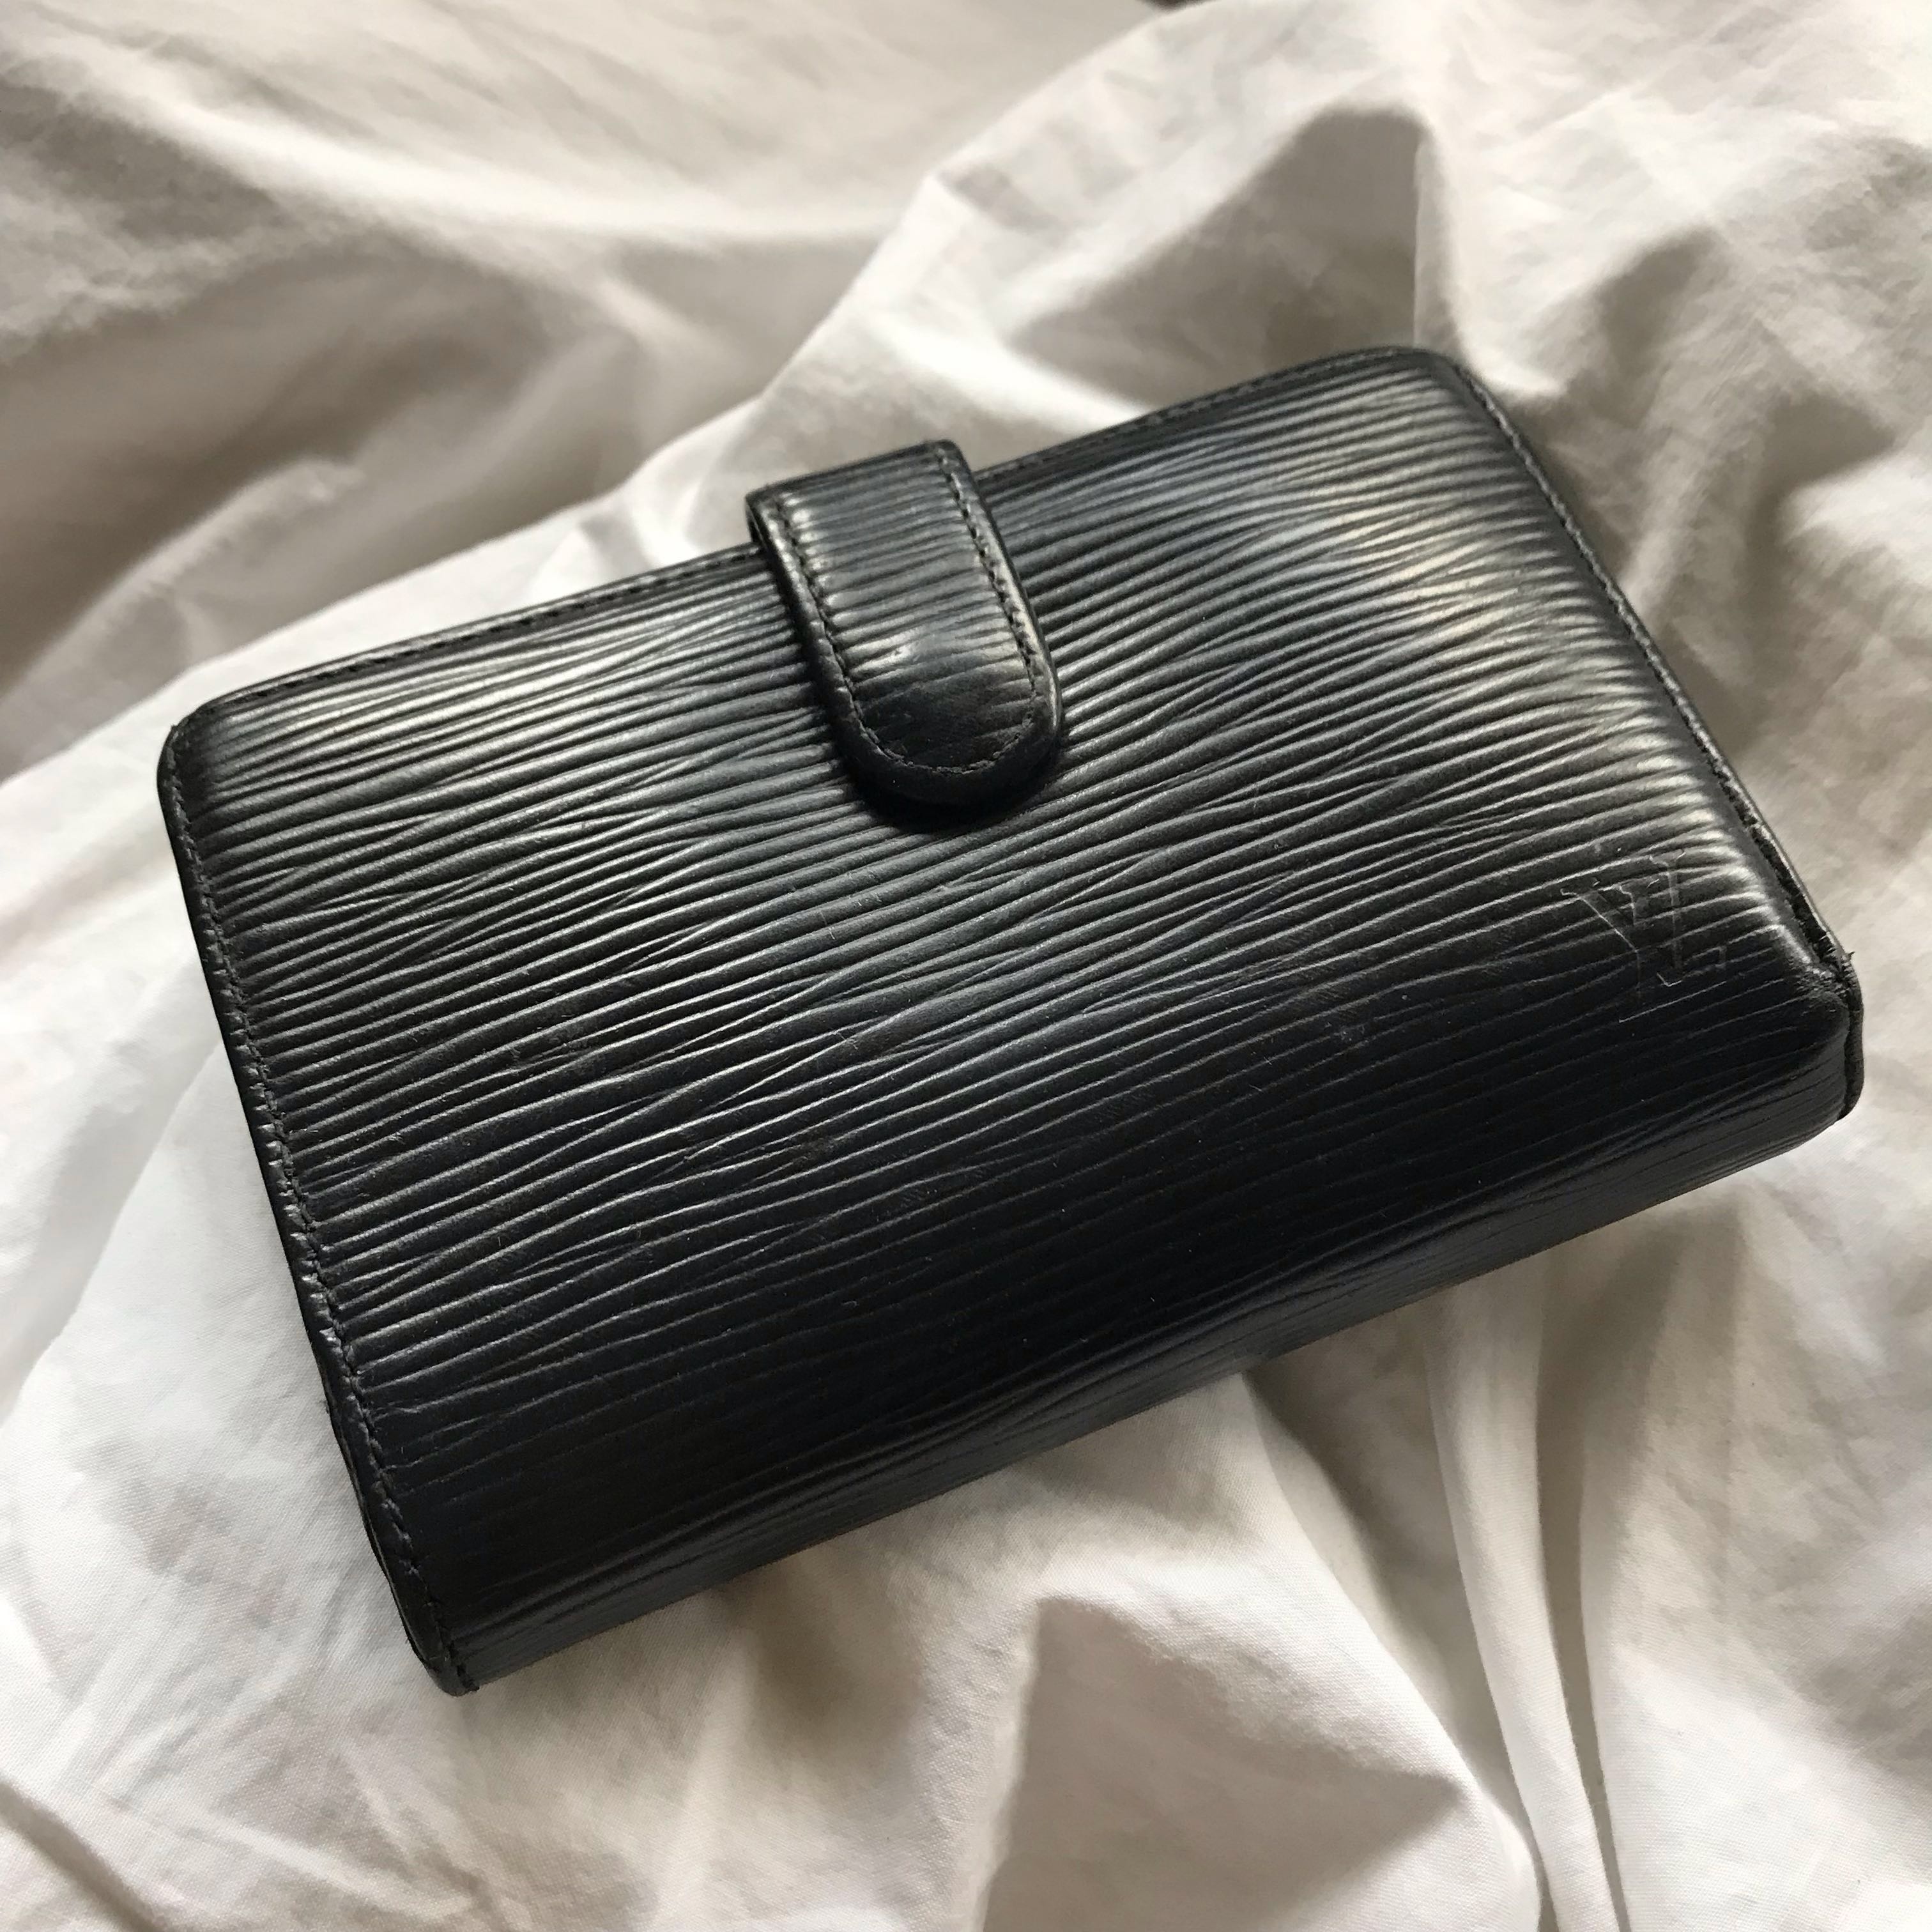 Louis Vuitton Red Epi Kisslock Wallet with Box